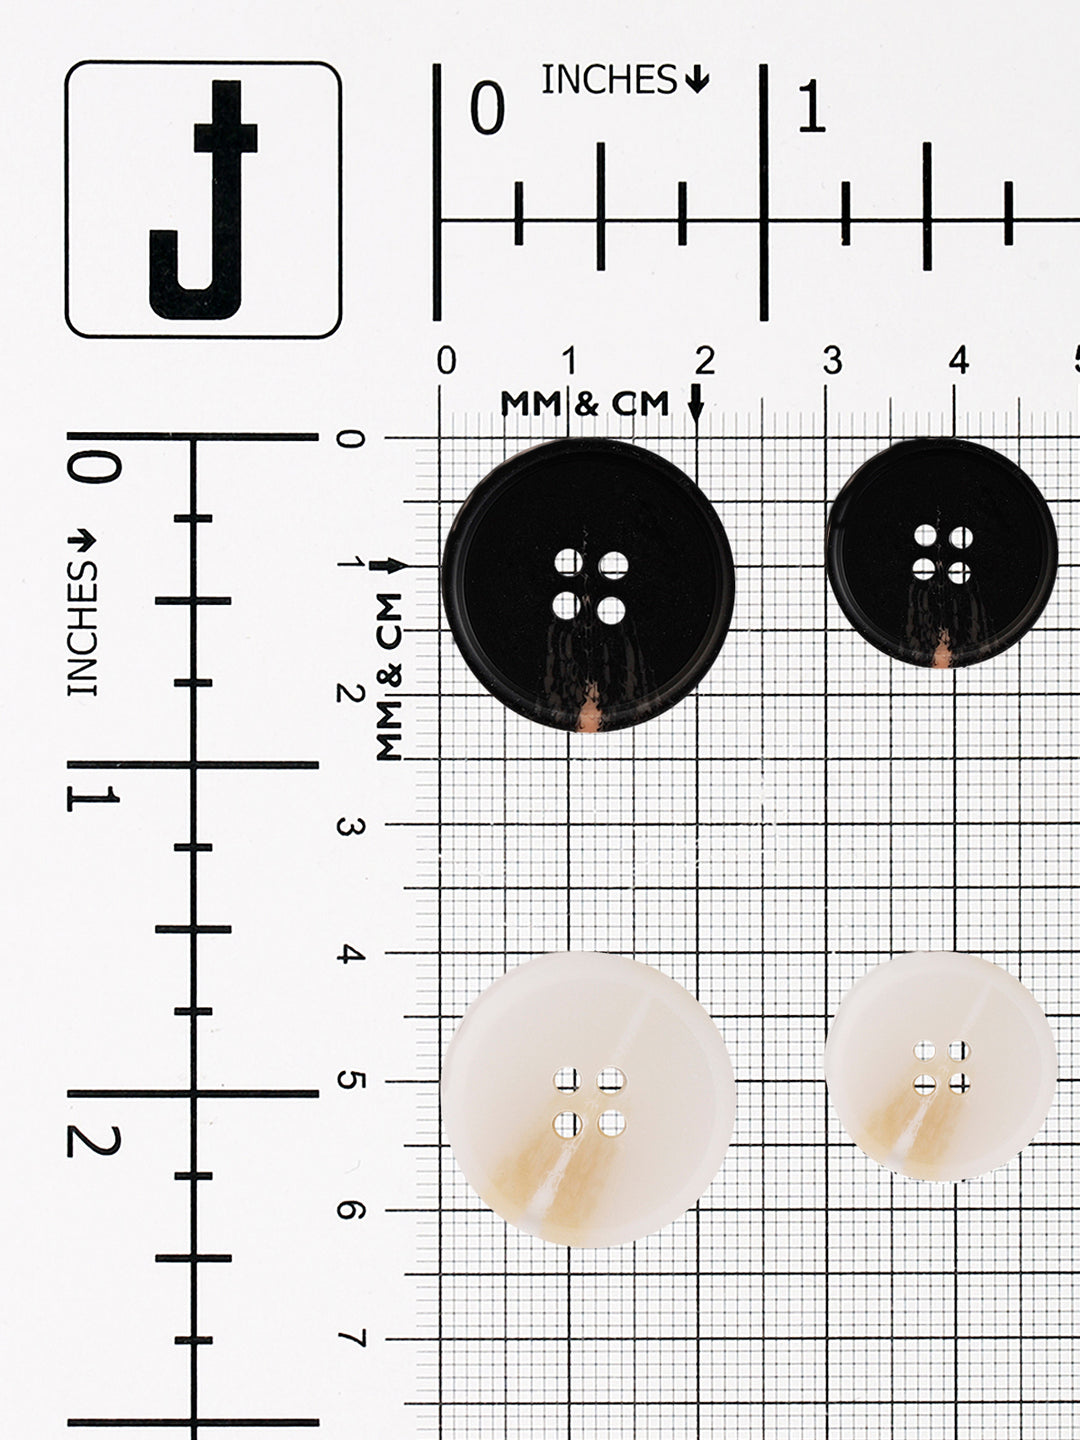 Black & White Round Shape 4-Hole Blazer/Coat Button